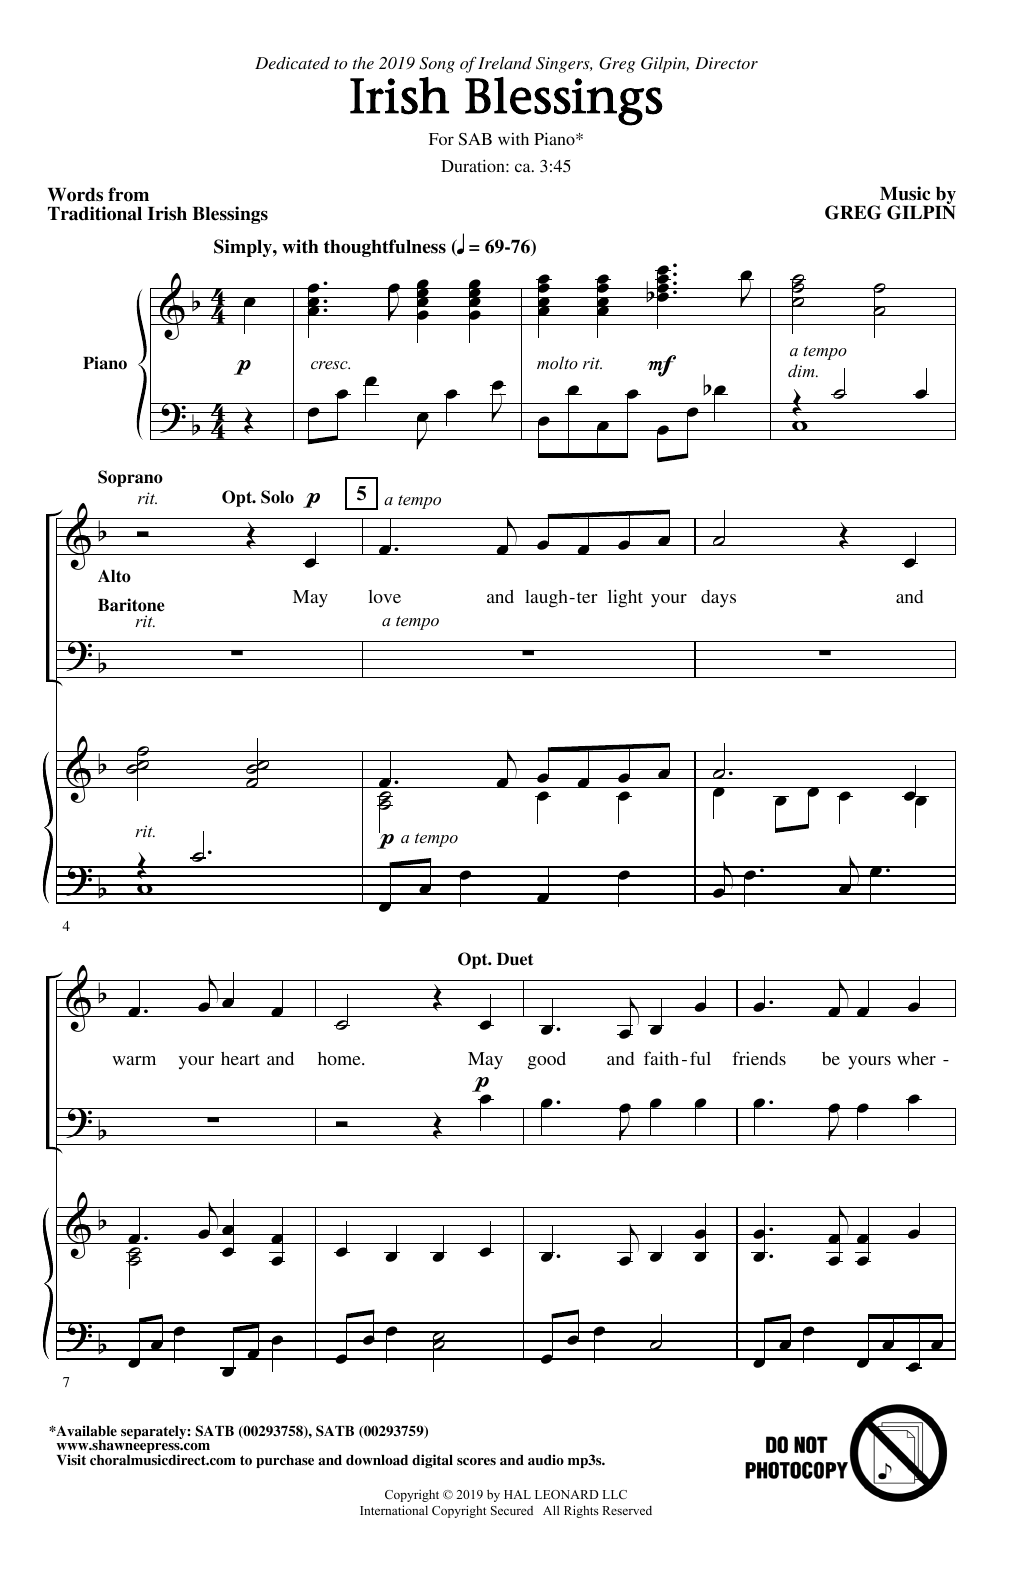 Greg Gilpin Irish Blessings Sheet Music Notes & Chords for SAB Choir - Download or Print PDF